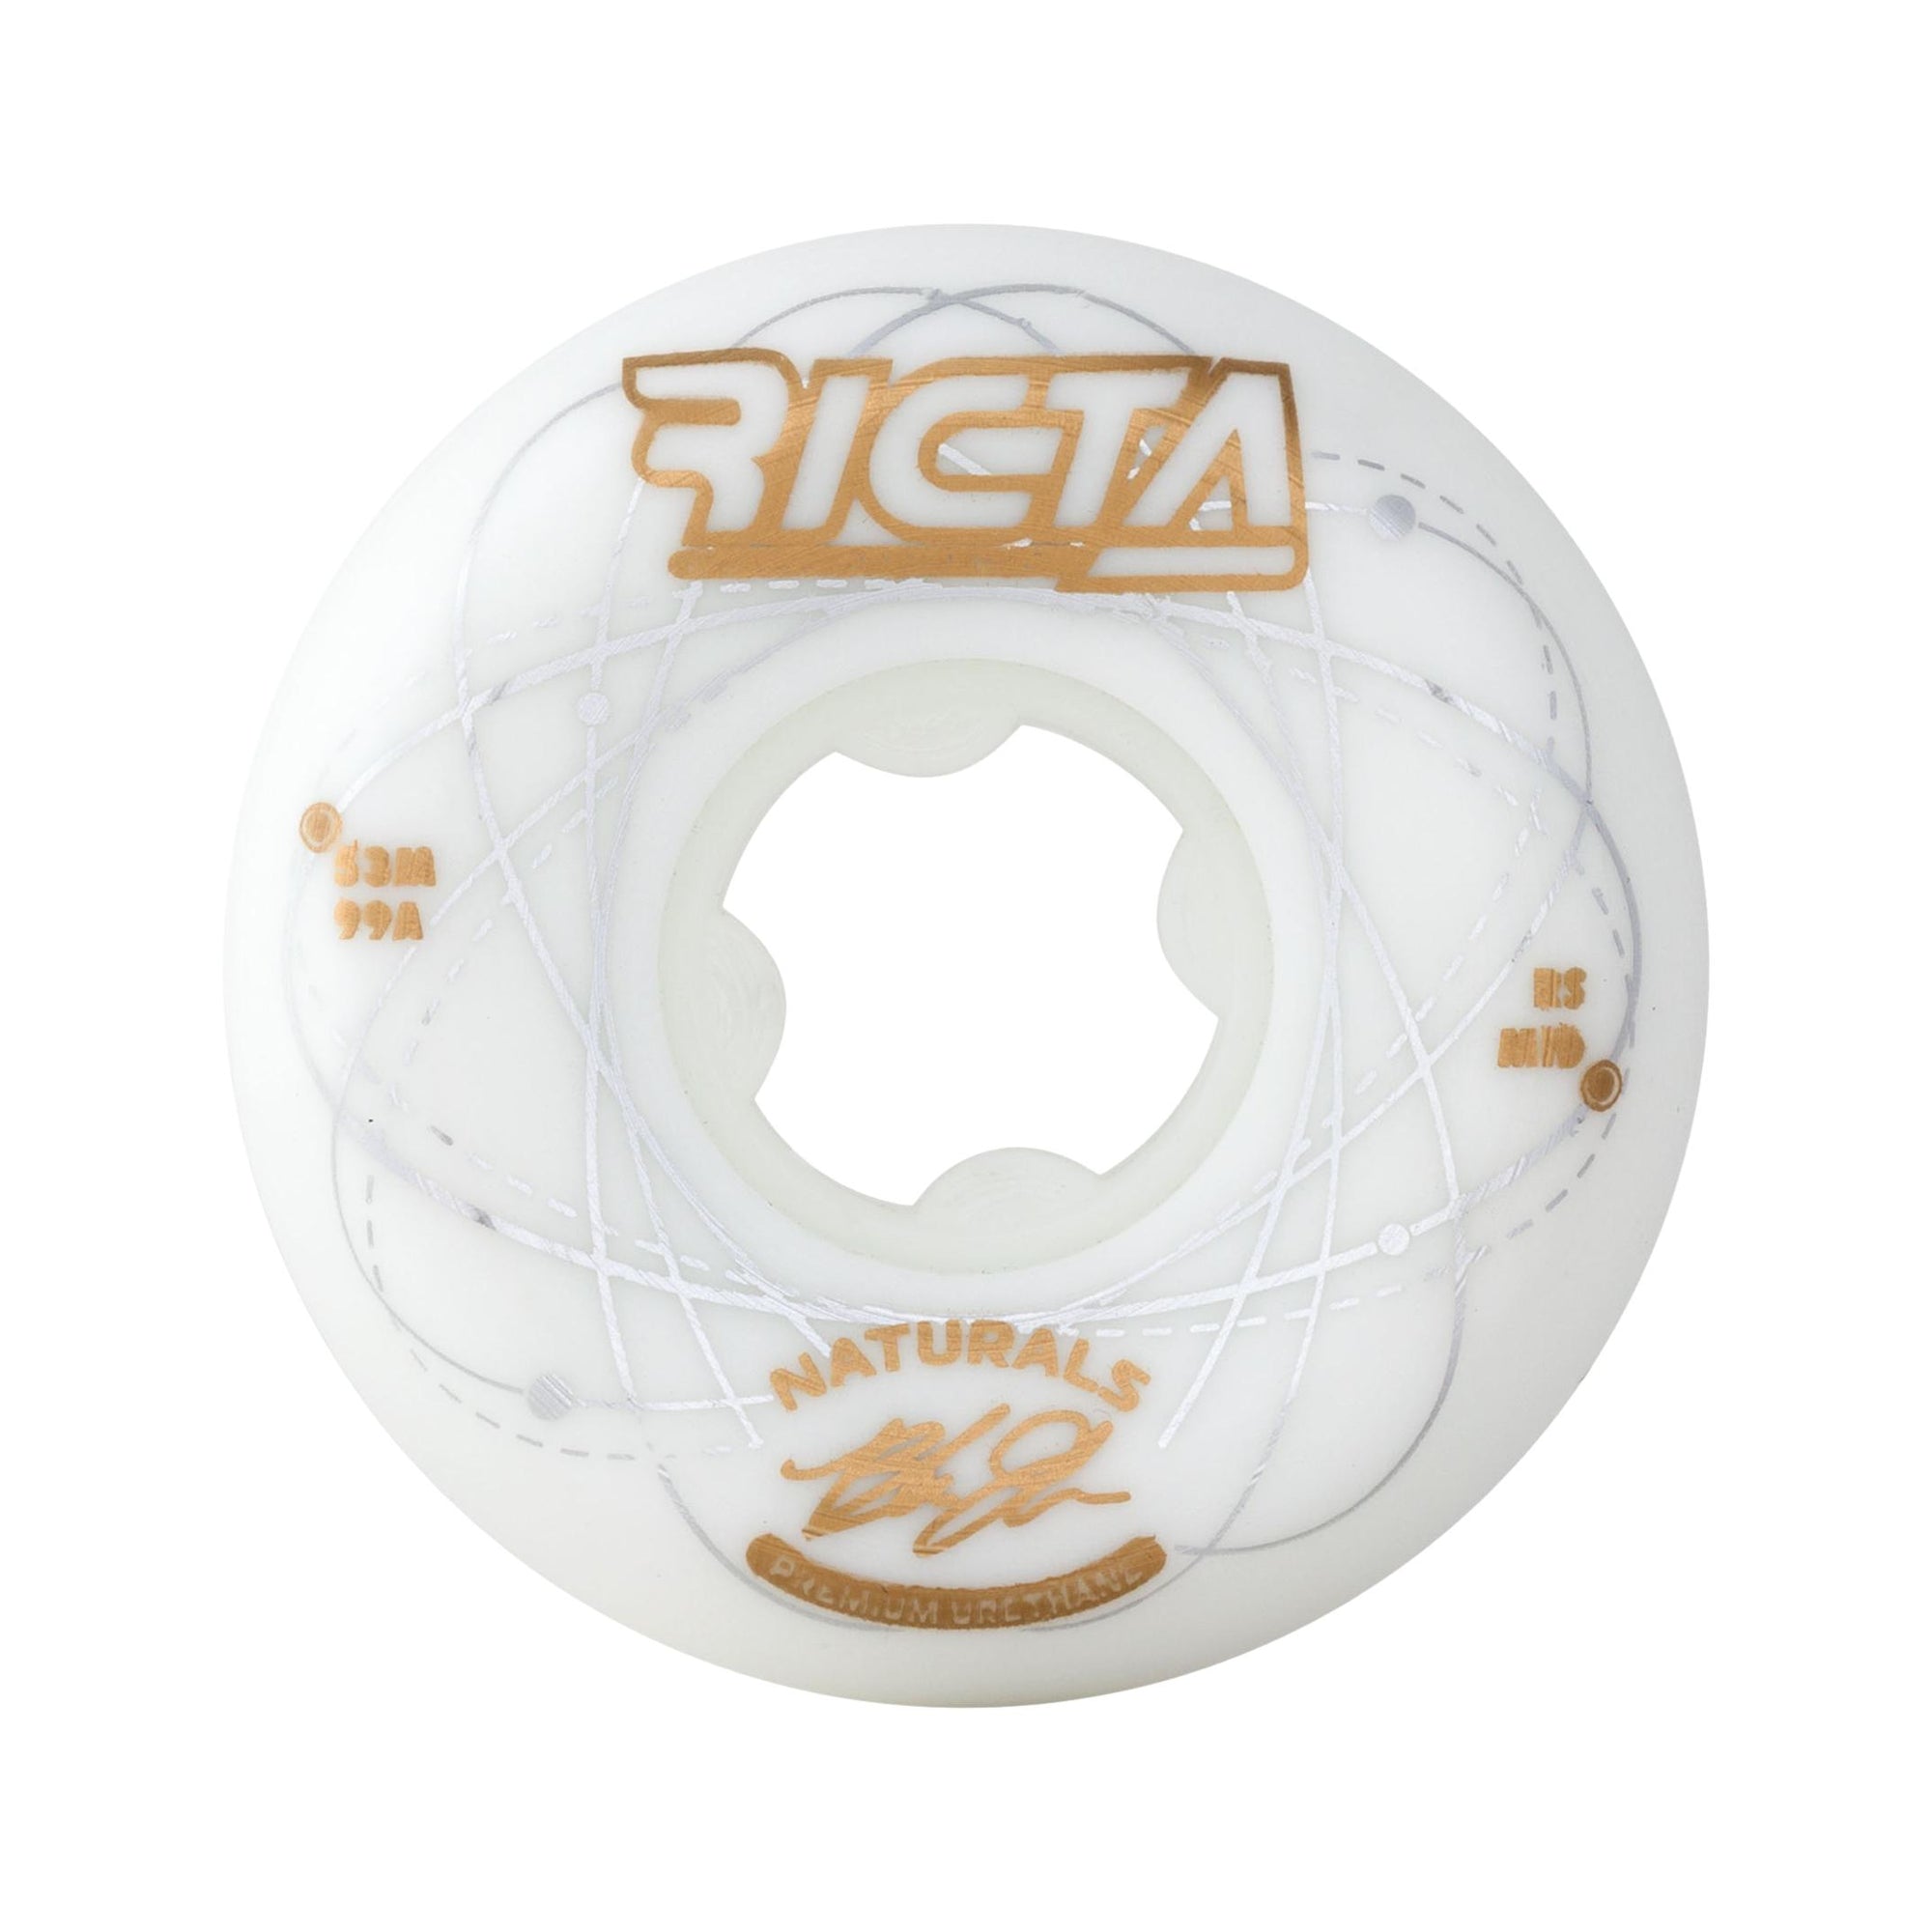 Ricta Johnson Orbital Naturals 53mm 99a White/Gold Wheels - Venue Skateboards